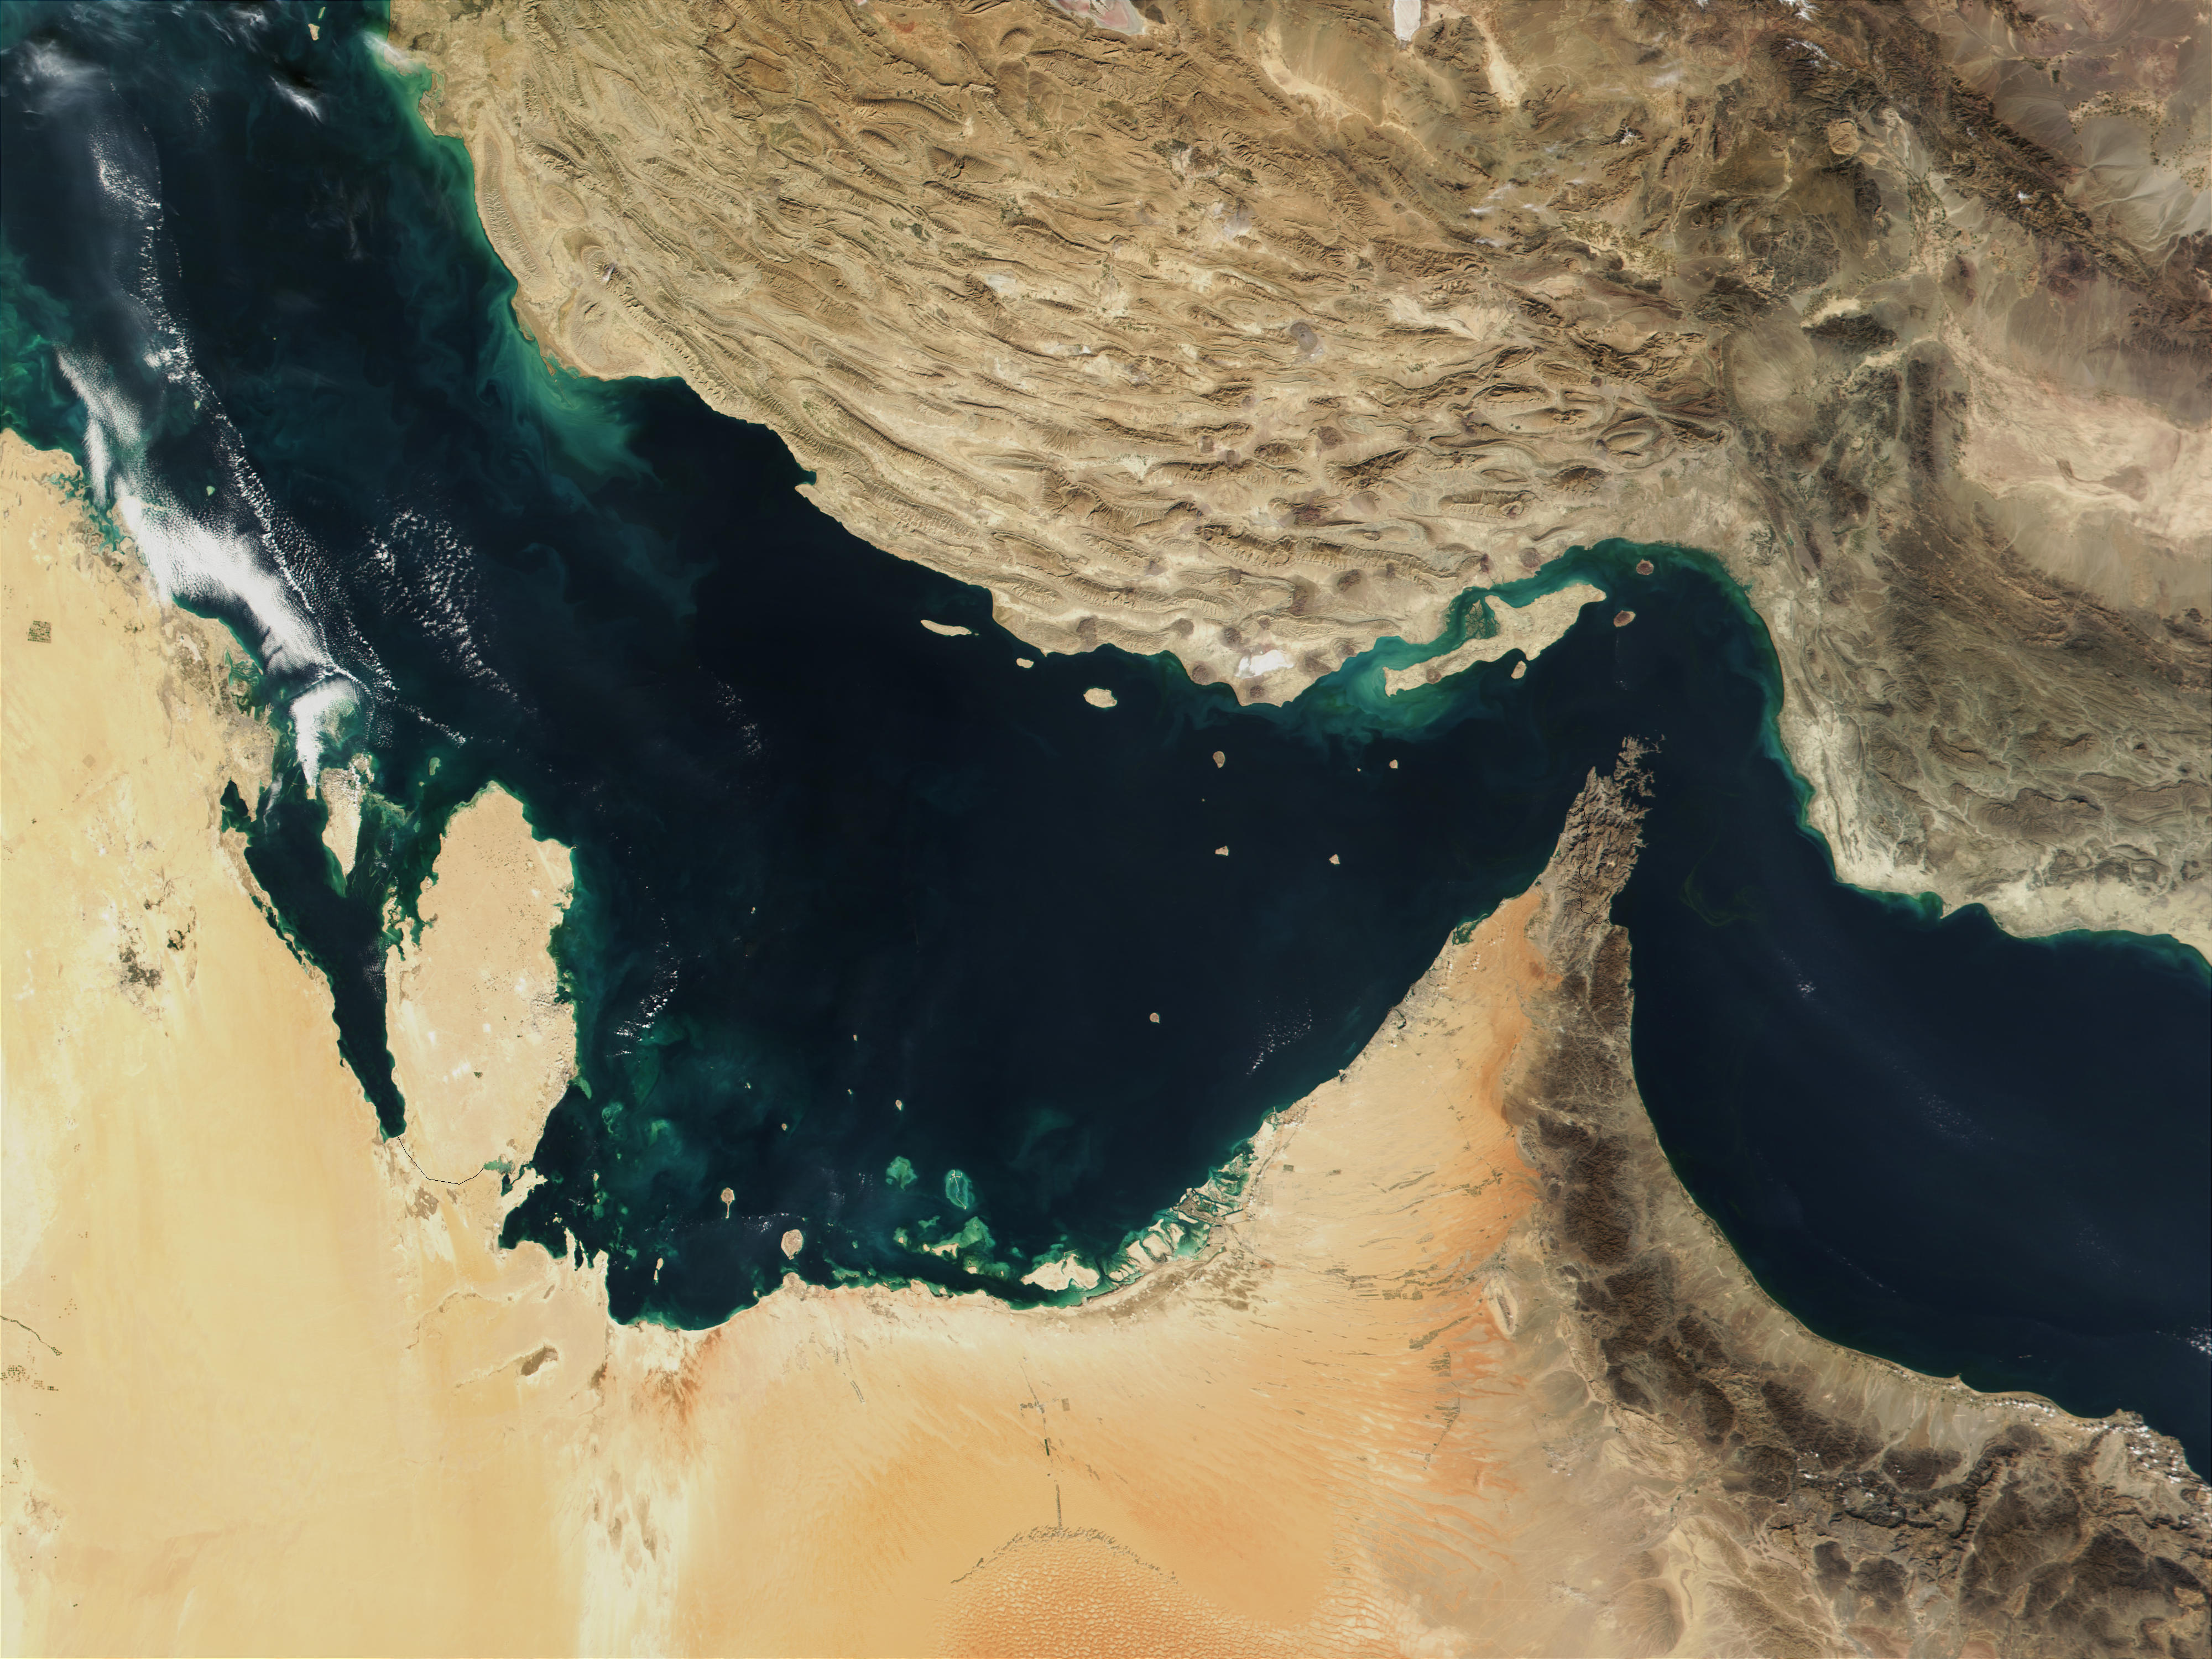 Oman Gulf